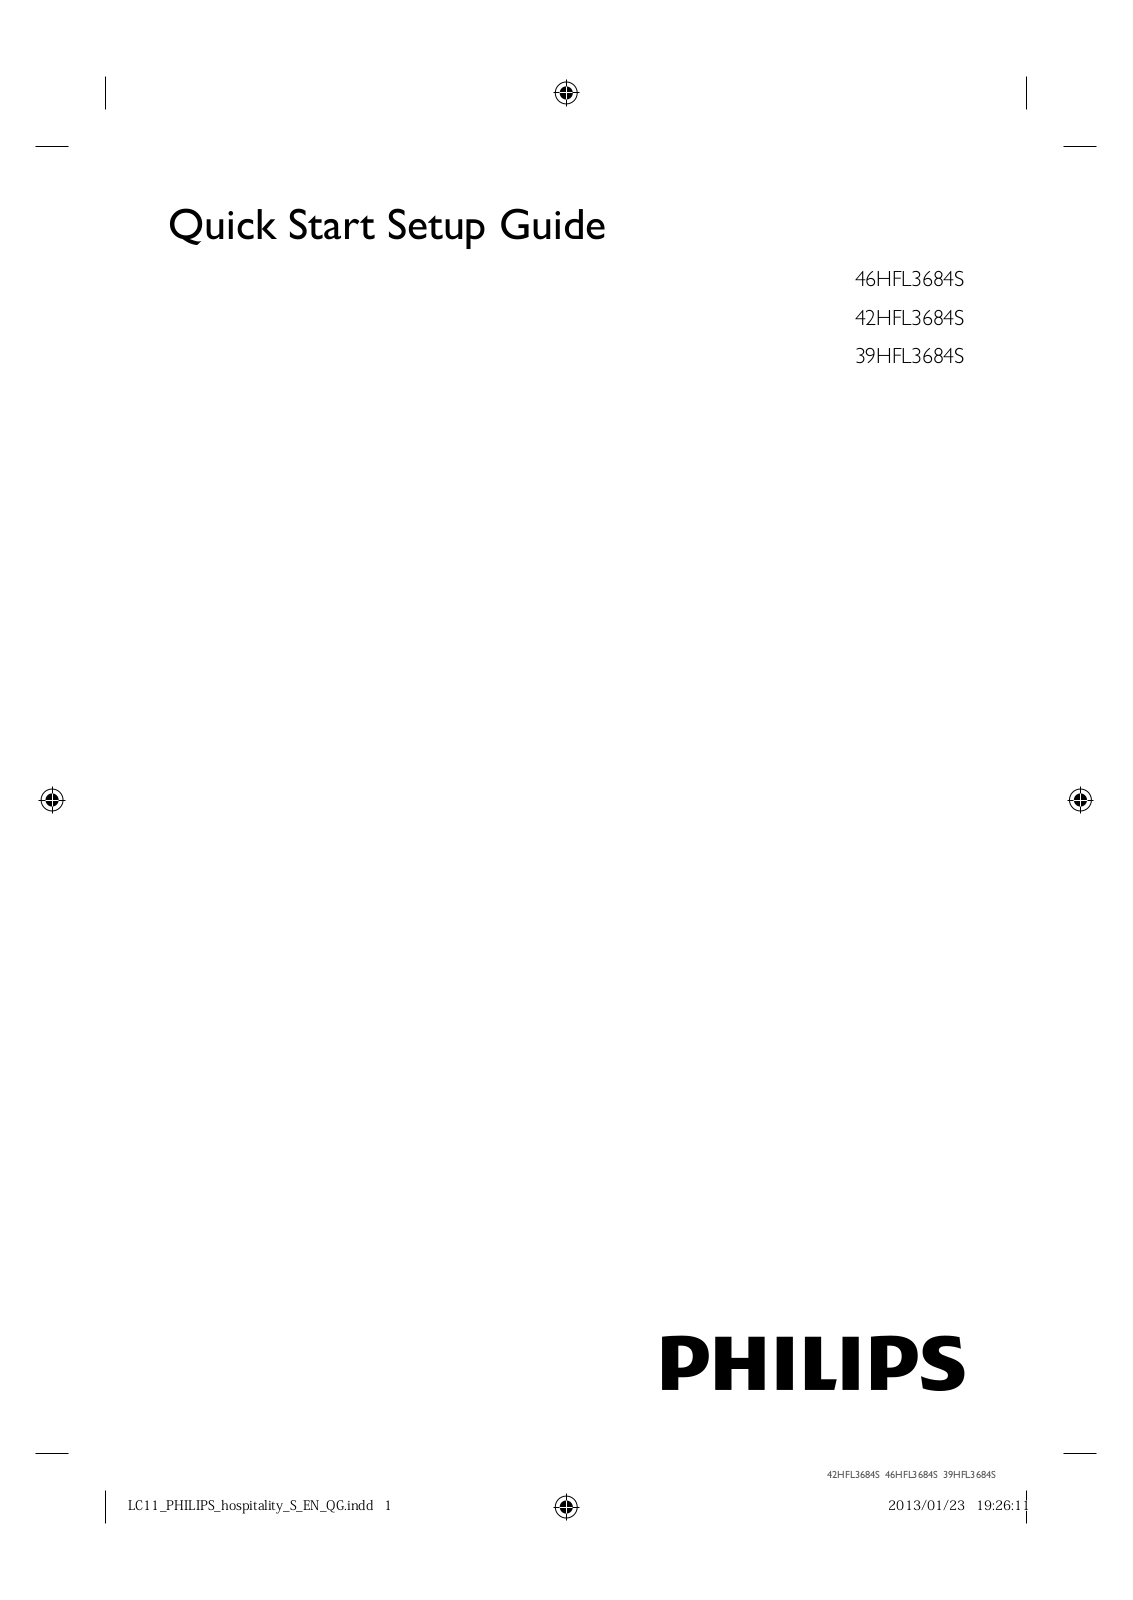 Philips 39HFL3684S Quick Start Manual